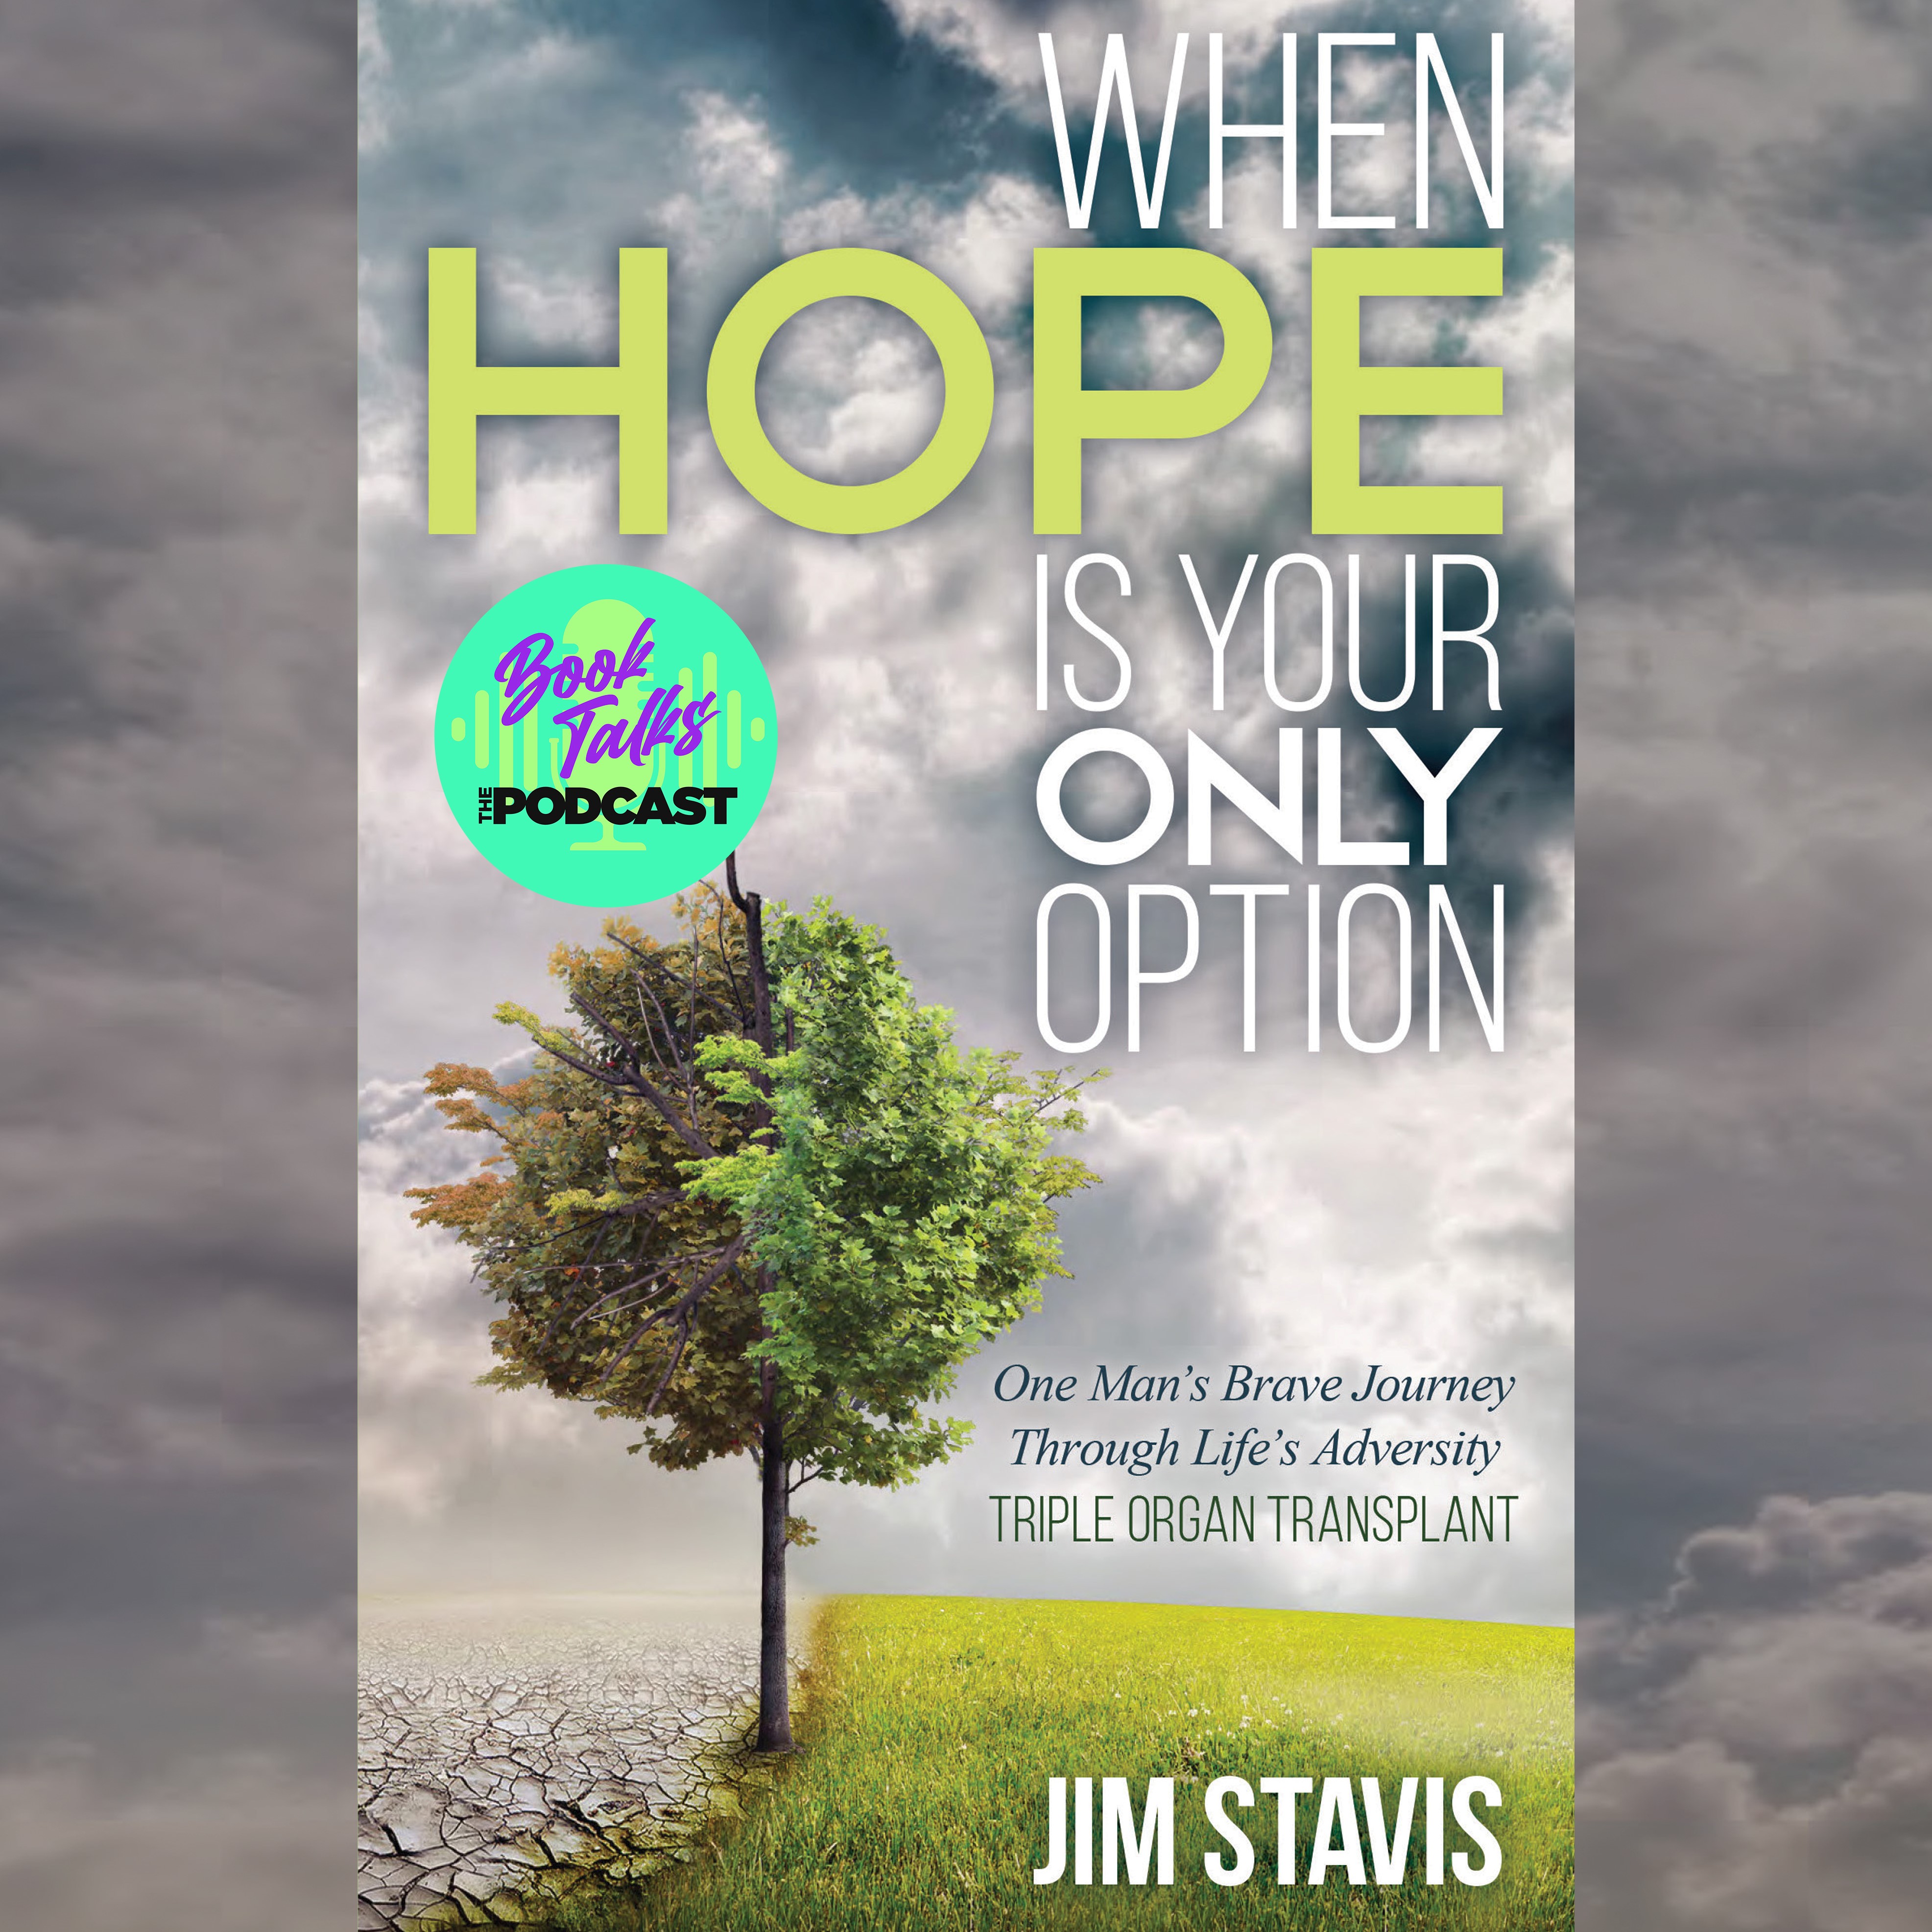 BookTalks: The Podcast featuring Author Jim Stavis 